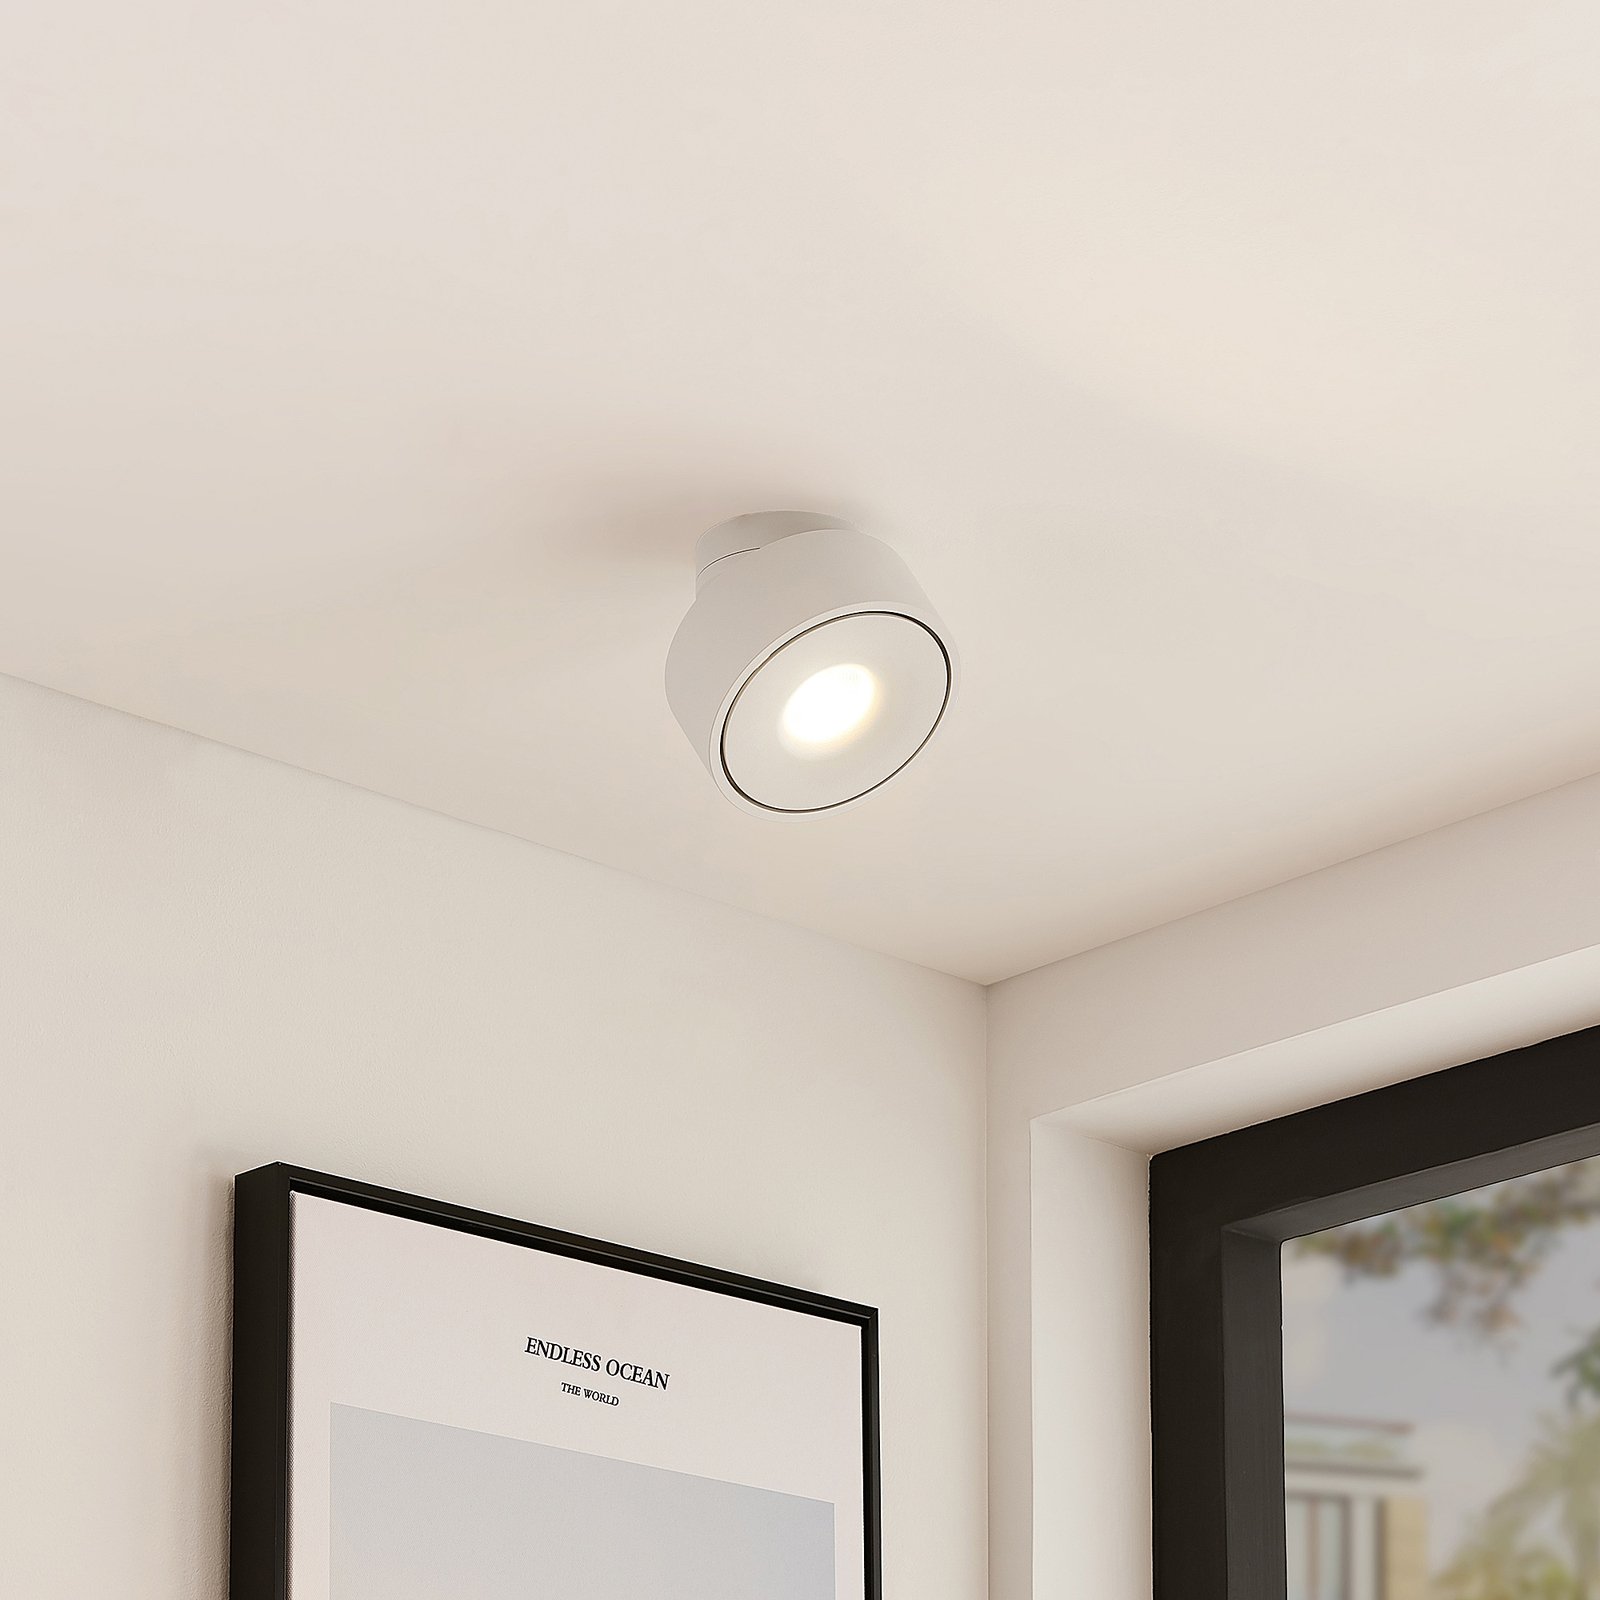 Arcchio Rotari LED plafondlamp, wit, zwenkbaar